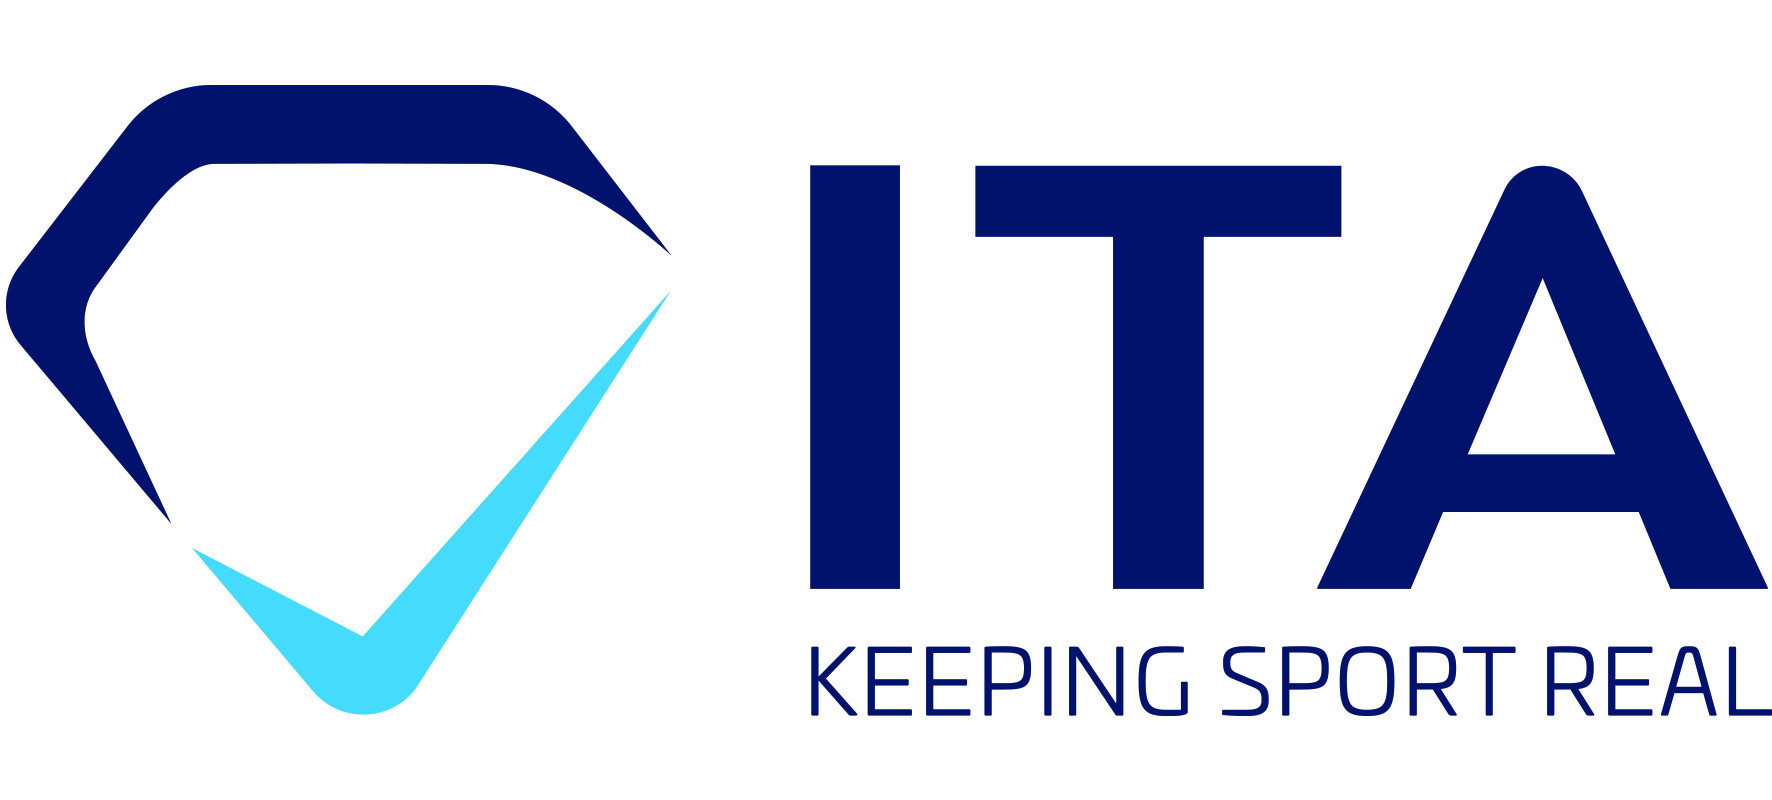 International Testing Agency reveals idea behind new logo and slogan